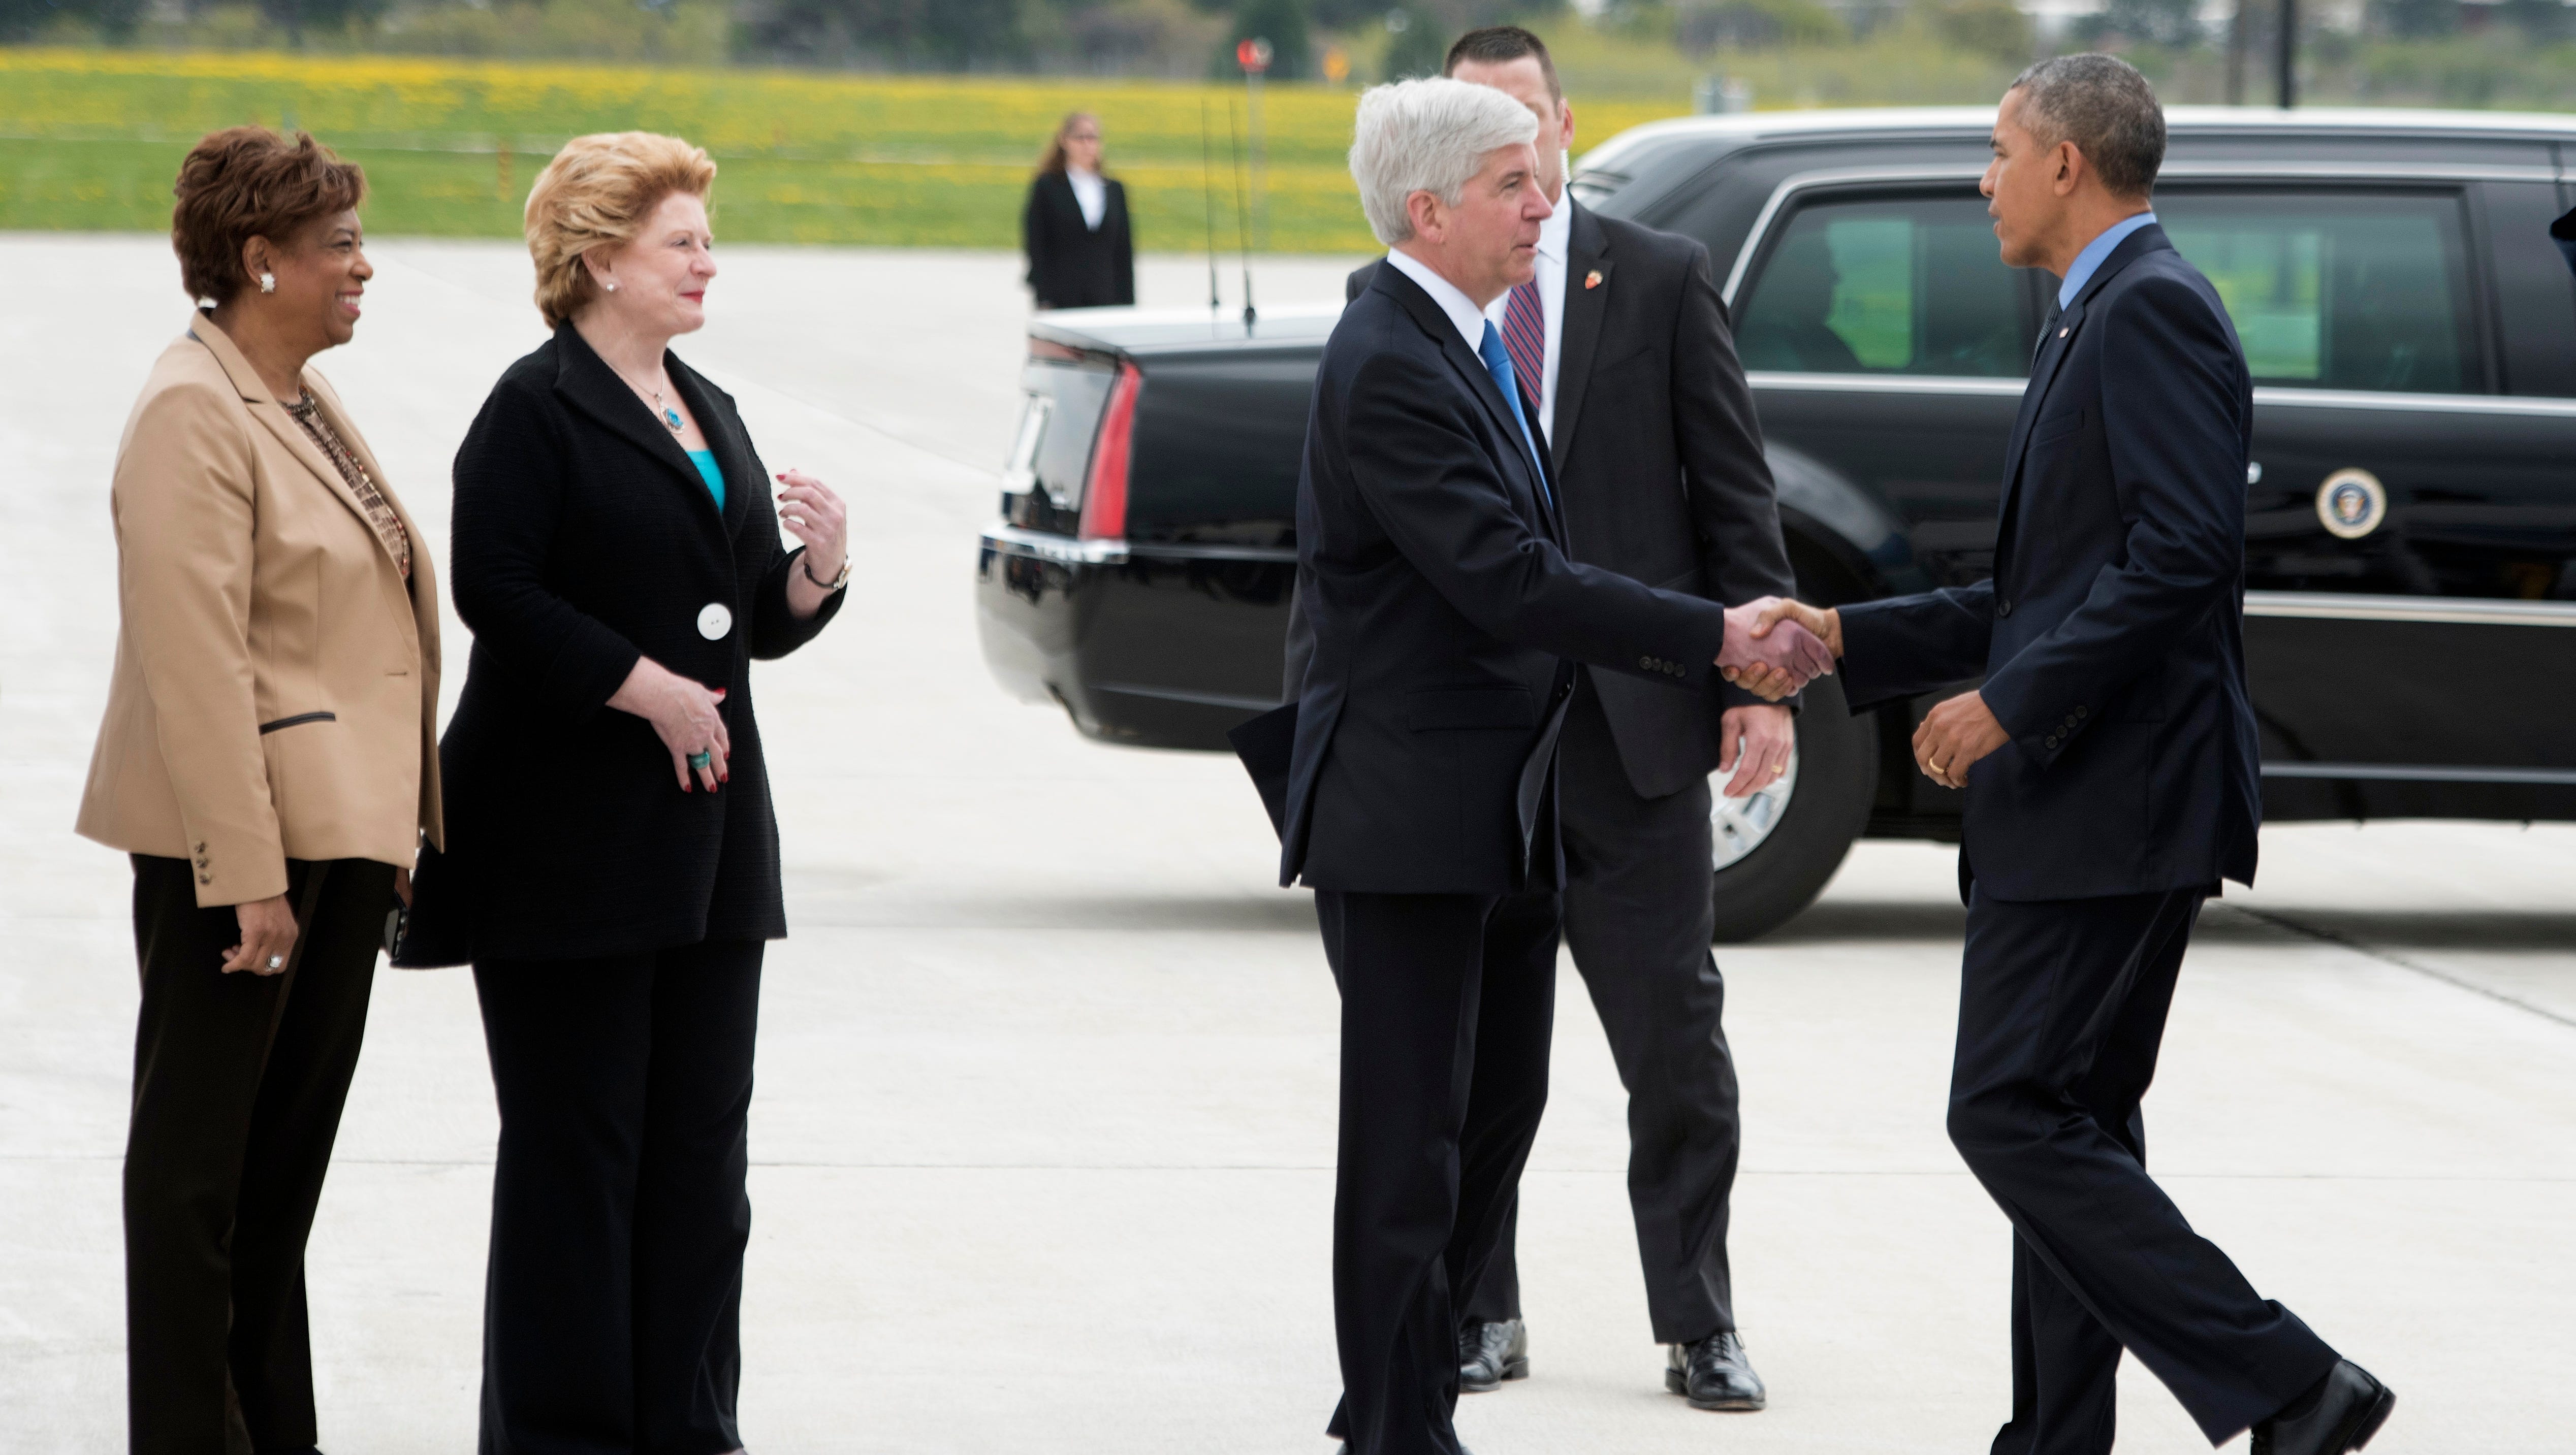 Rep. Brenda Lawrence, from left, Sen. Debbie Stabenow and Gov. Rick Snyder greet President Obama at Bishop International Airport.